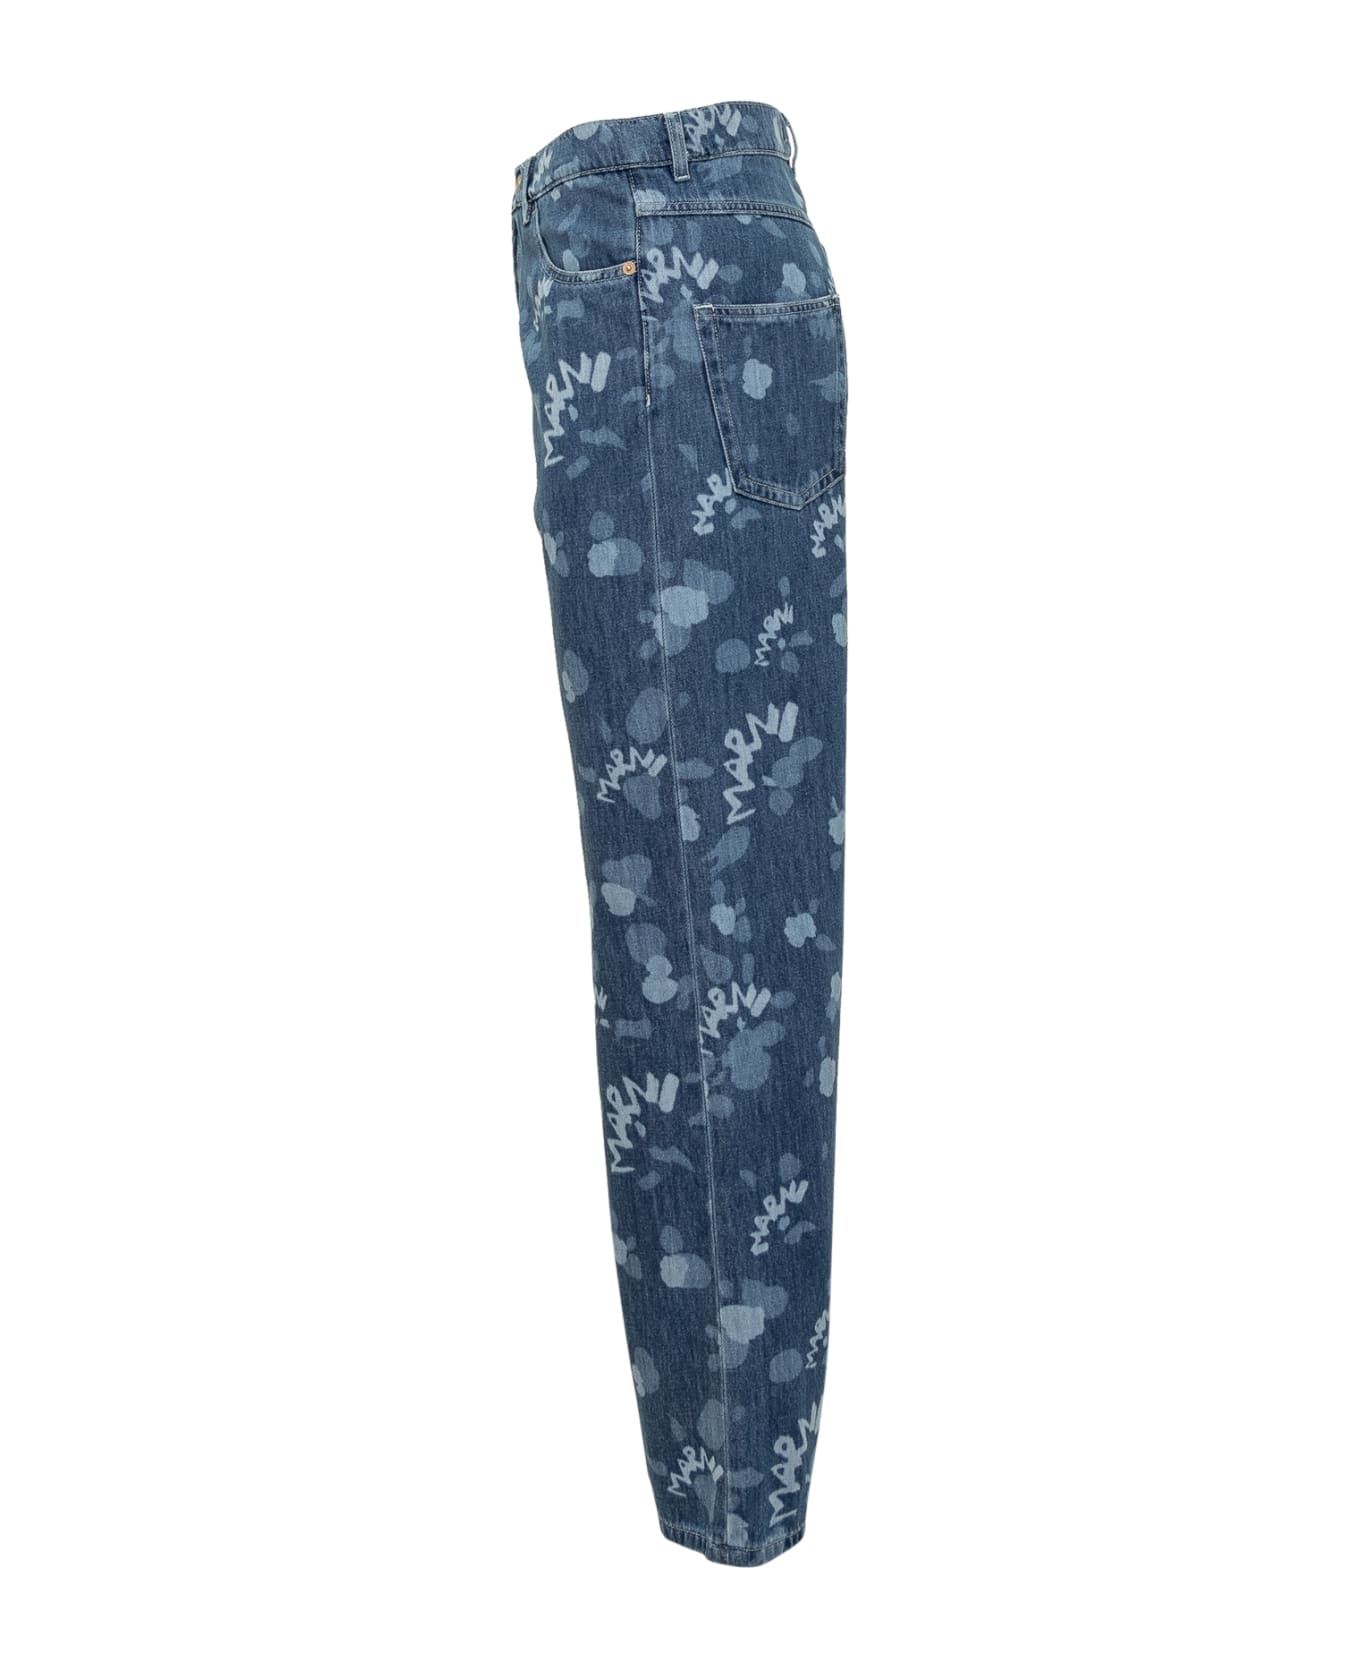 Marni Jeans With Marni Dripping Print - IRIS BLUE ボトムス